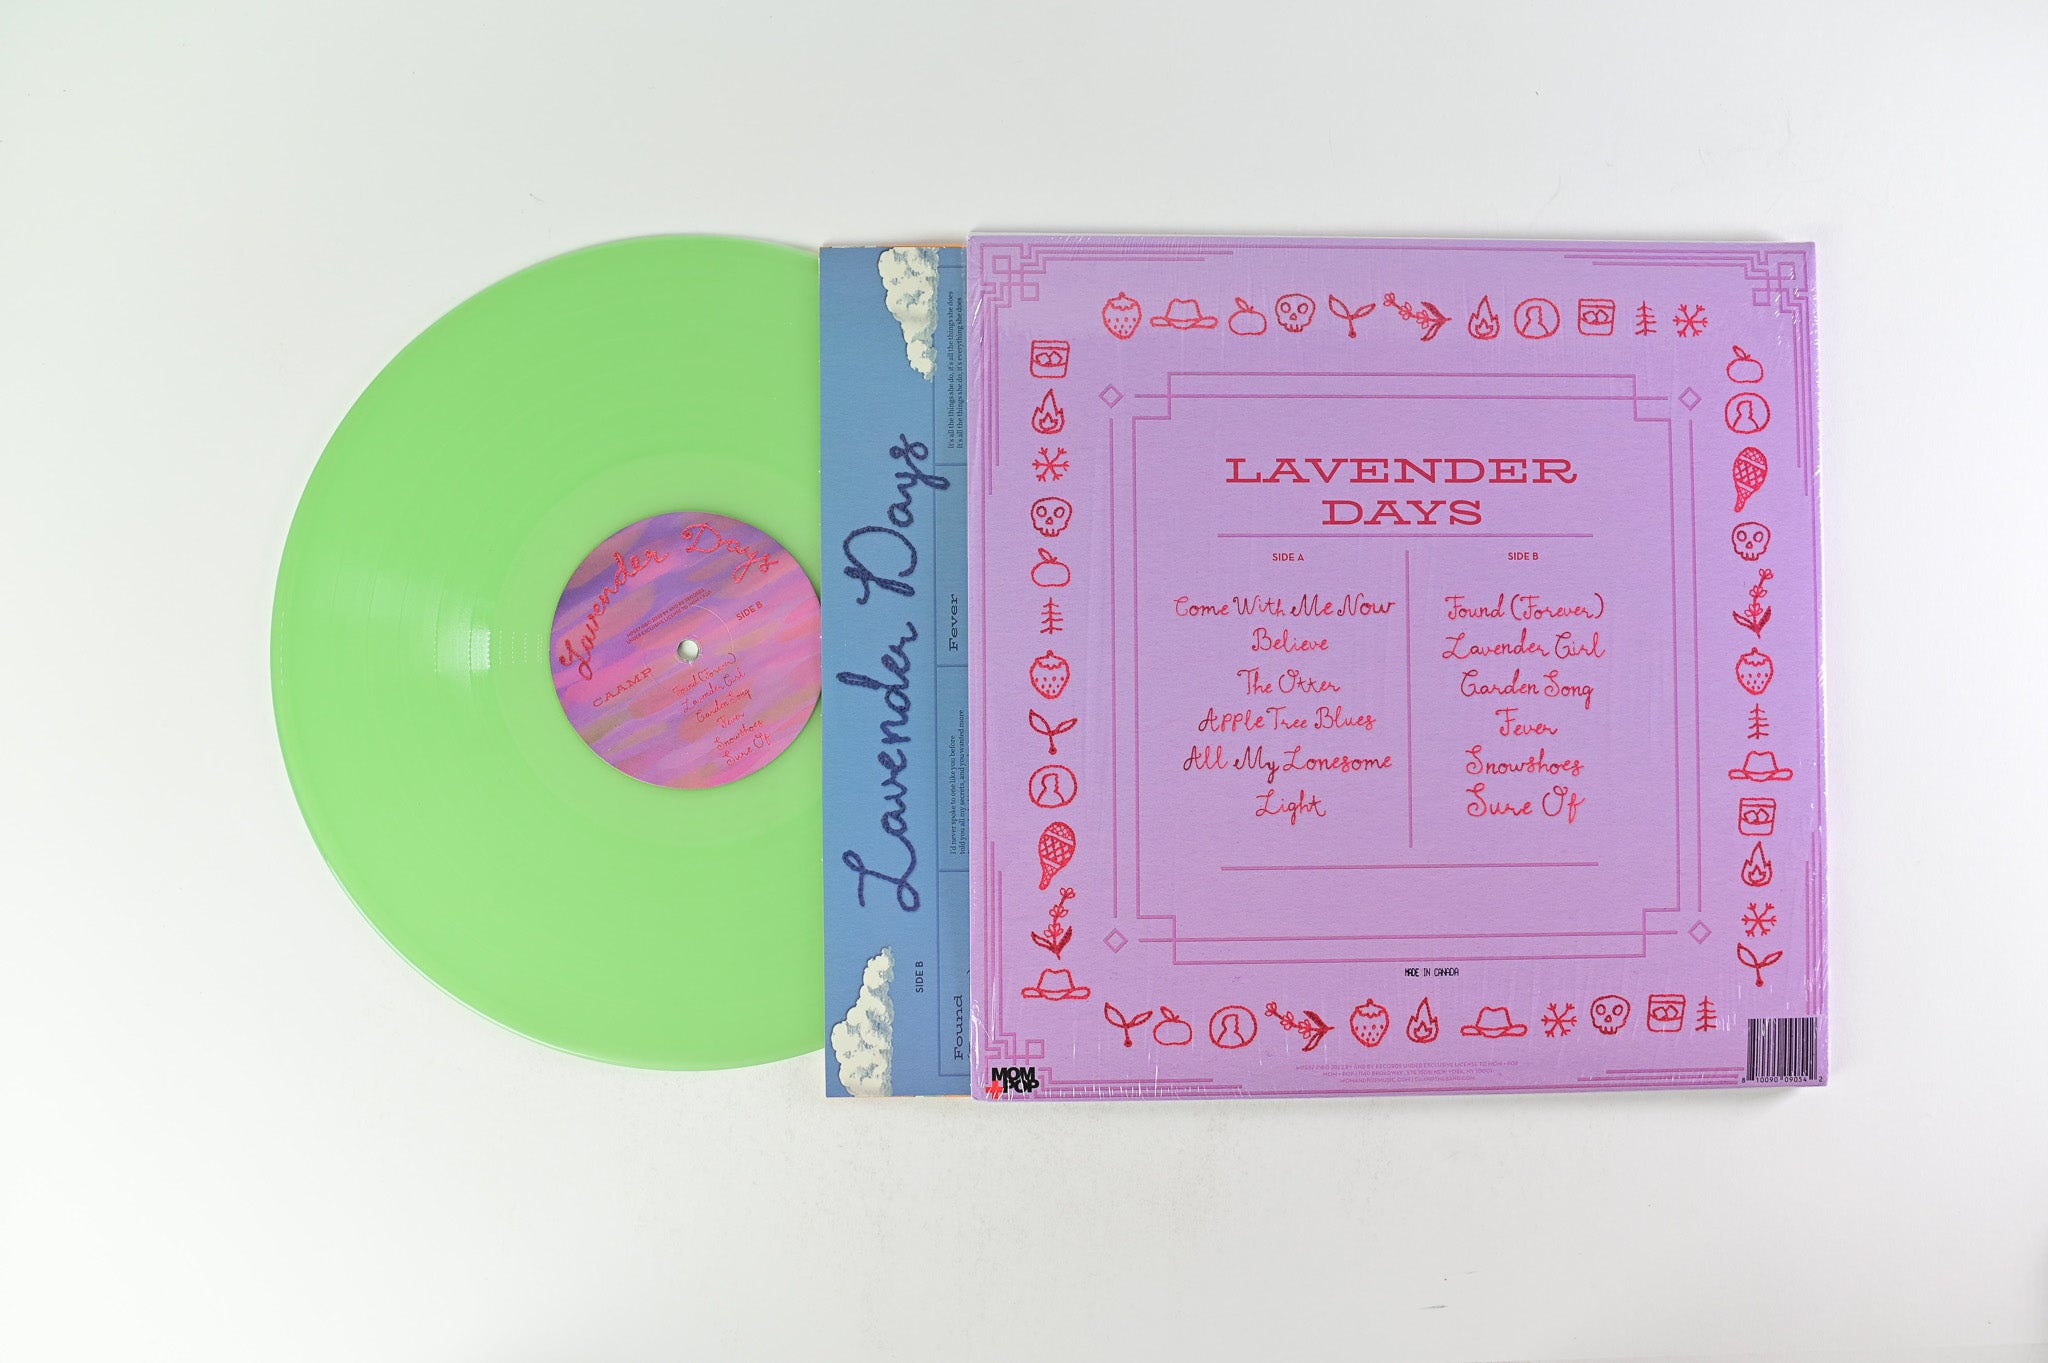 Caamp - Lavender Days on Mom + Pop Coke Bottle Clear Vinyl